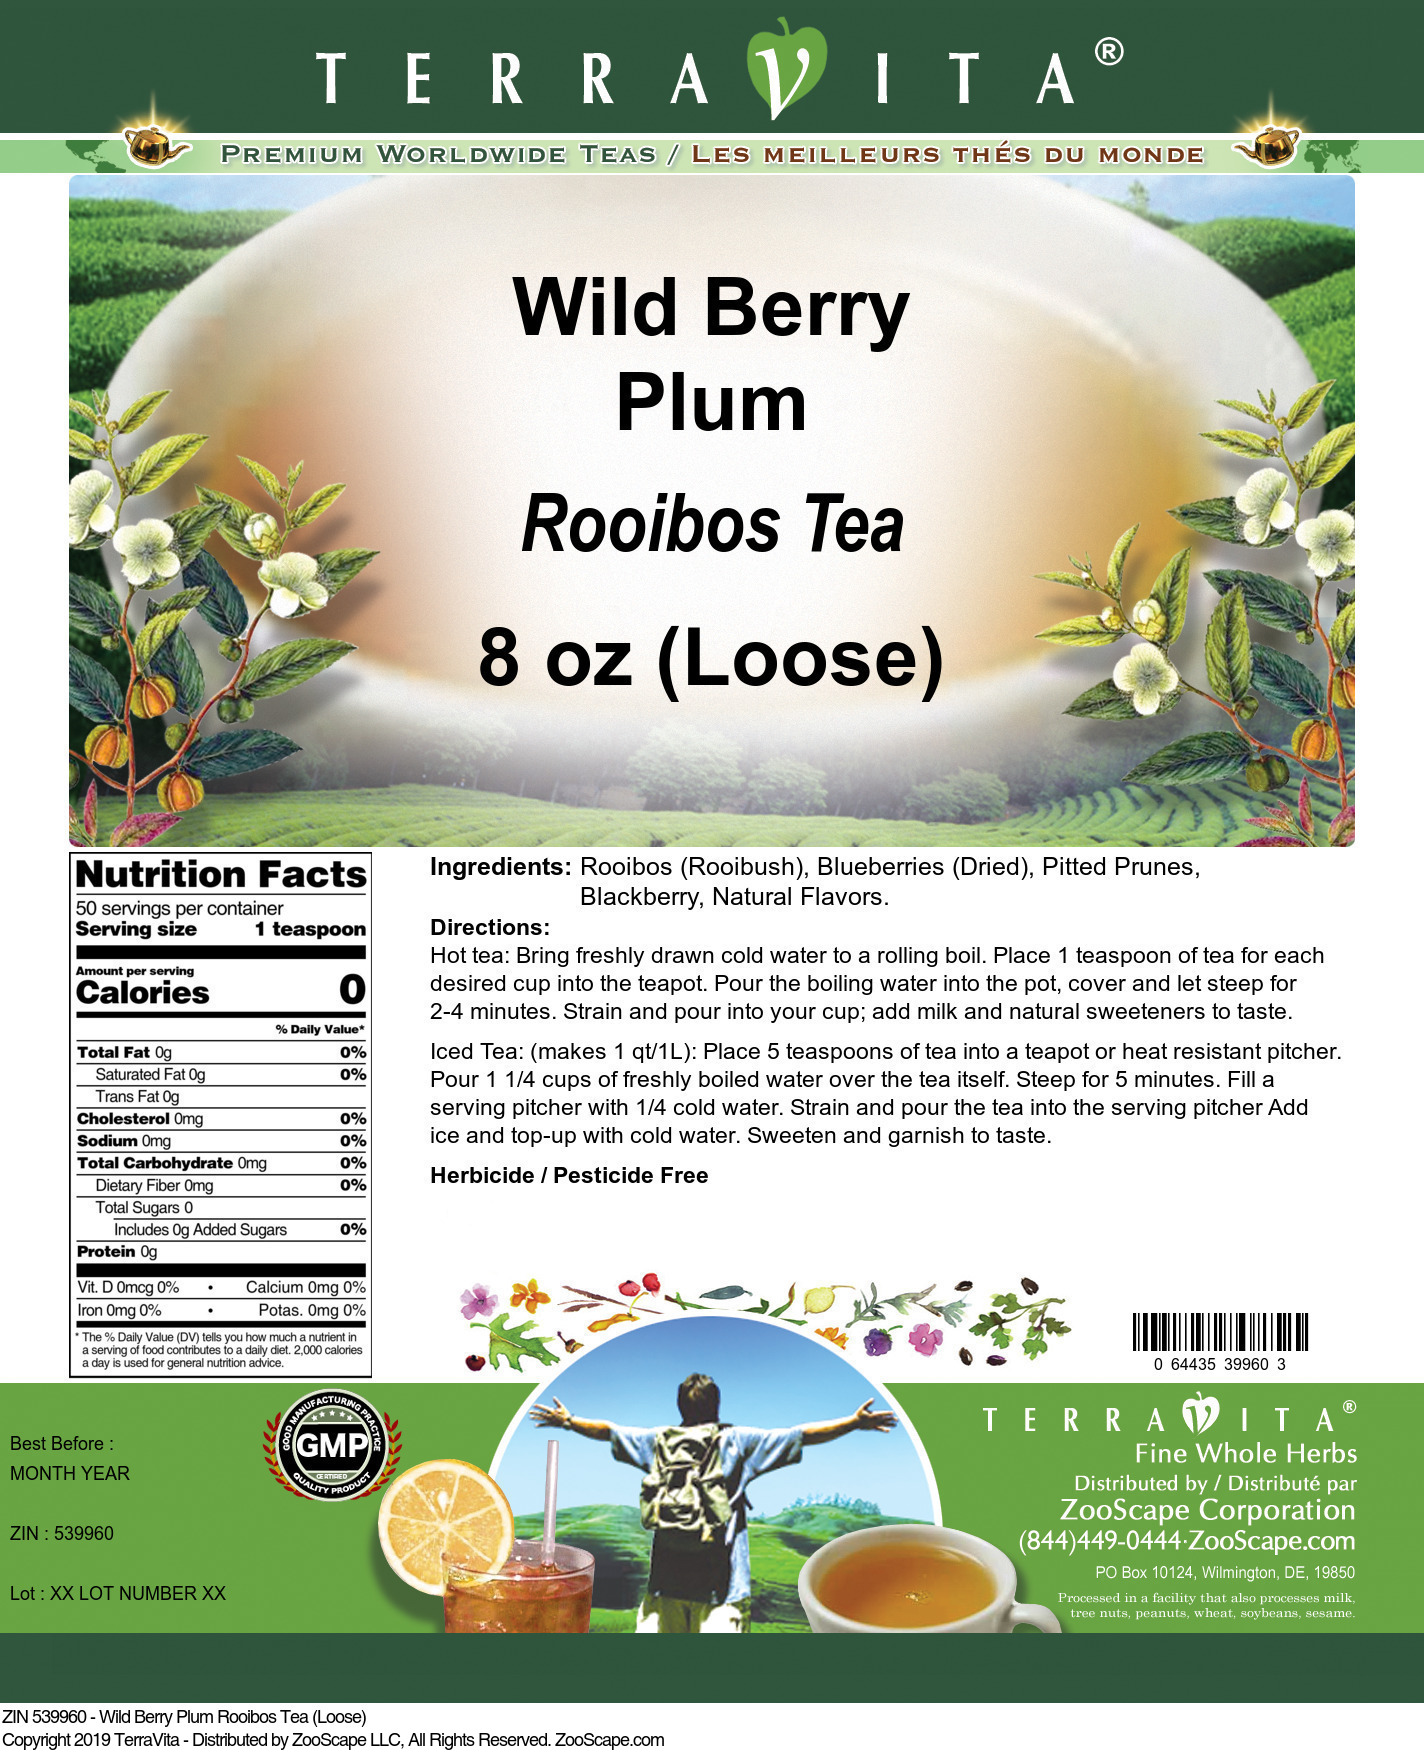 Wild Berry Plum Rooibos Tea (Loose) - Label